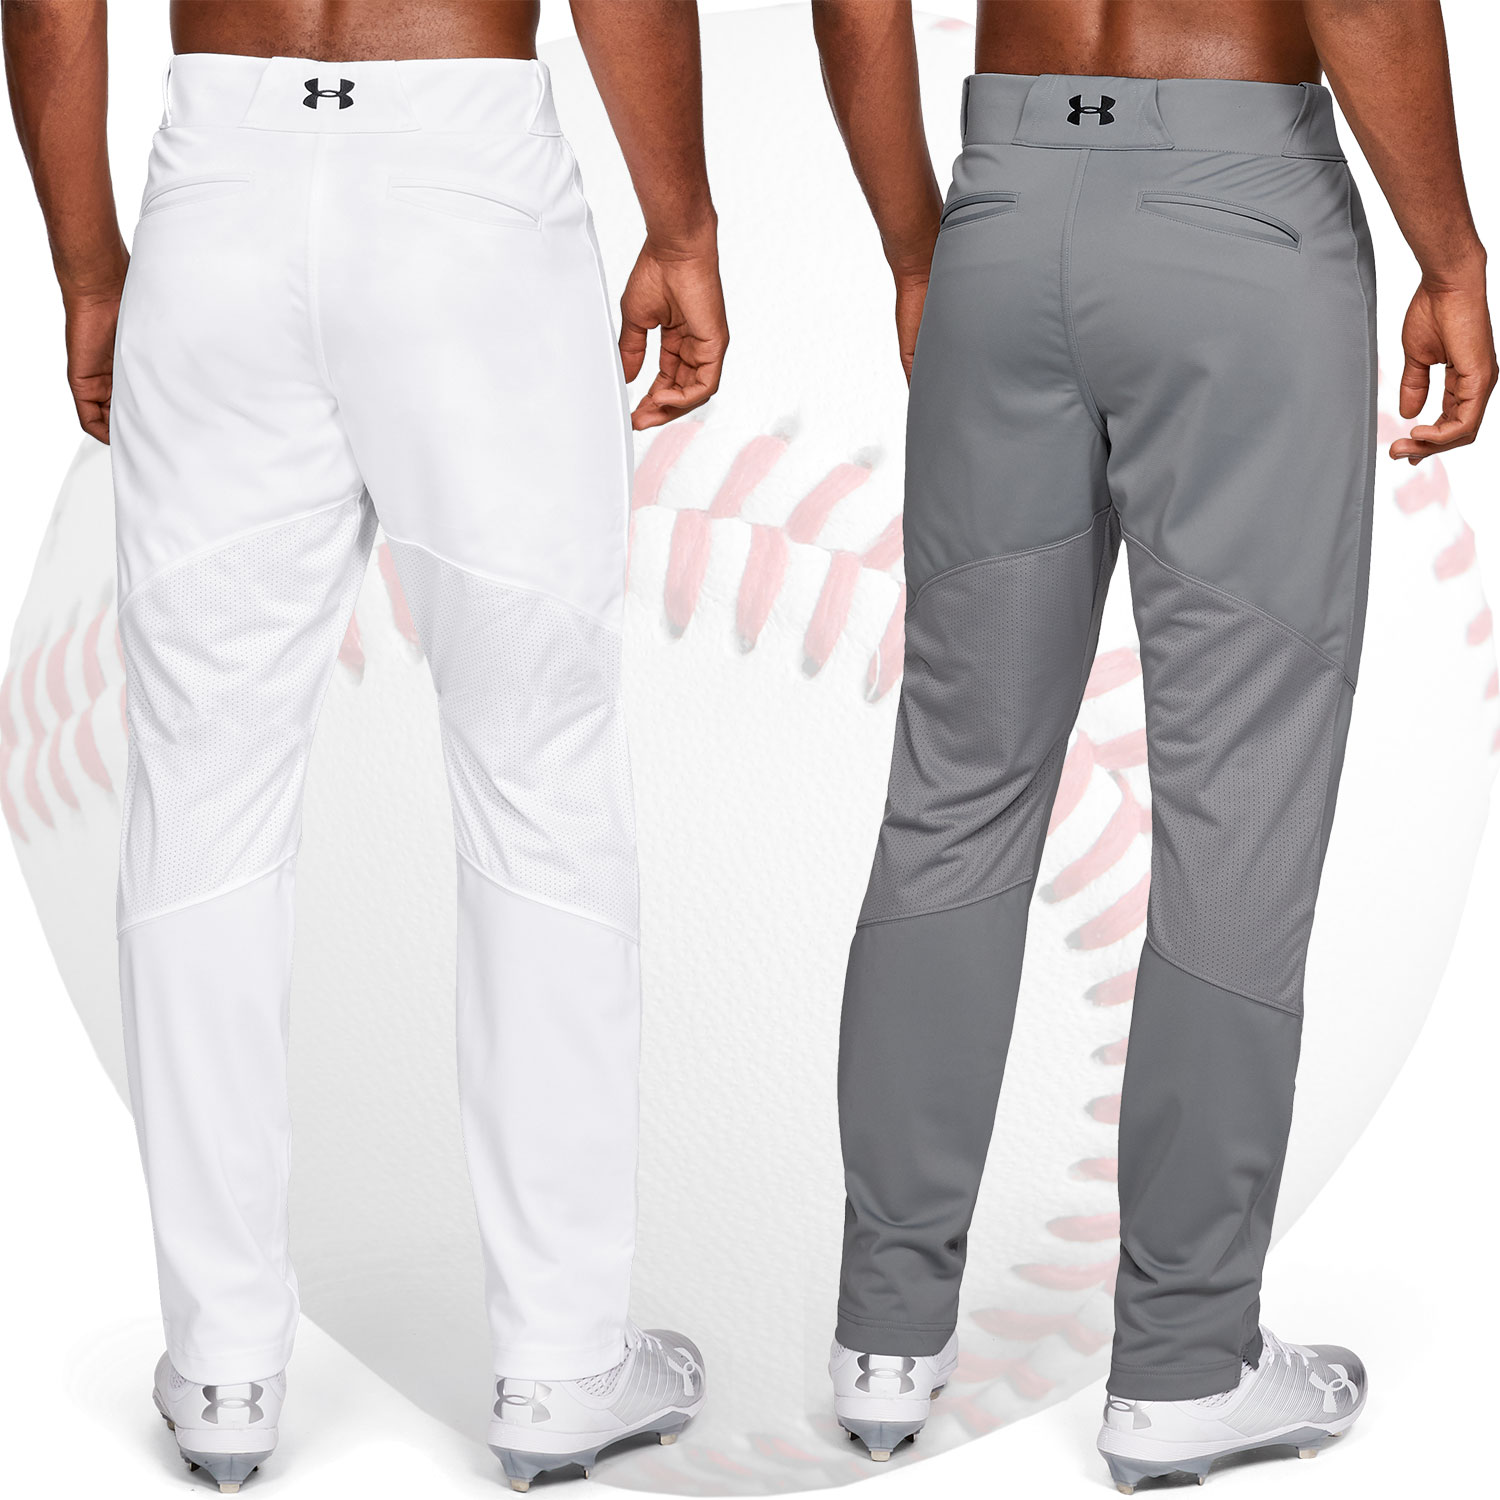 men's under armour baseball pants